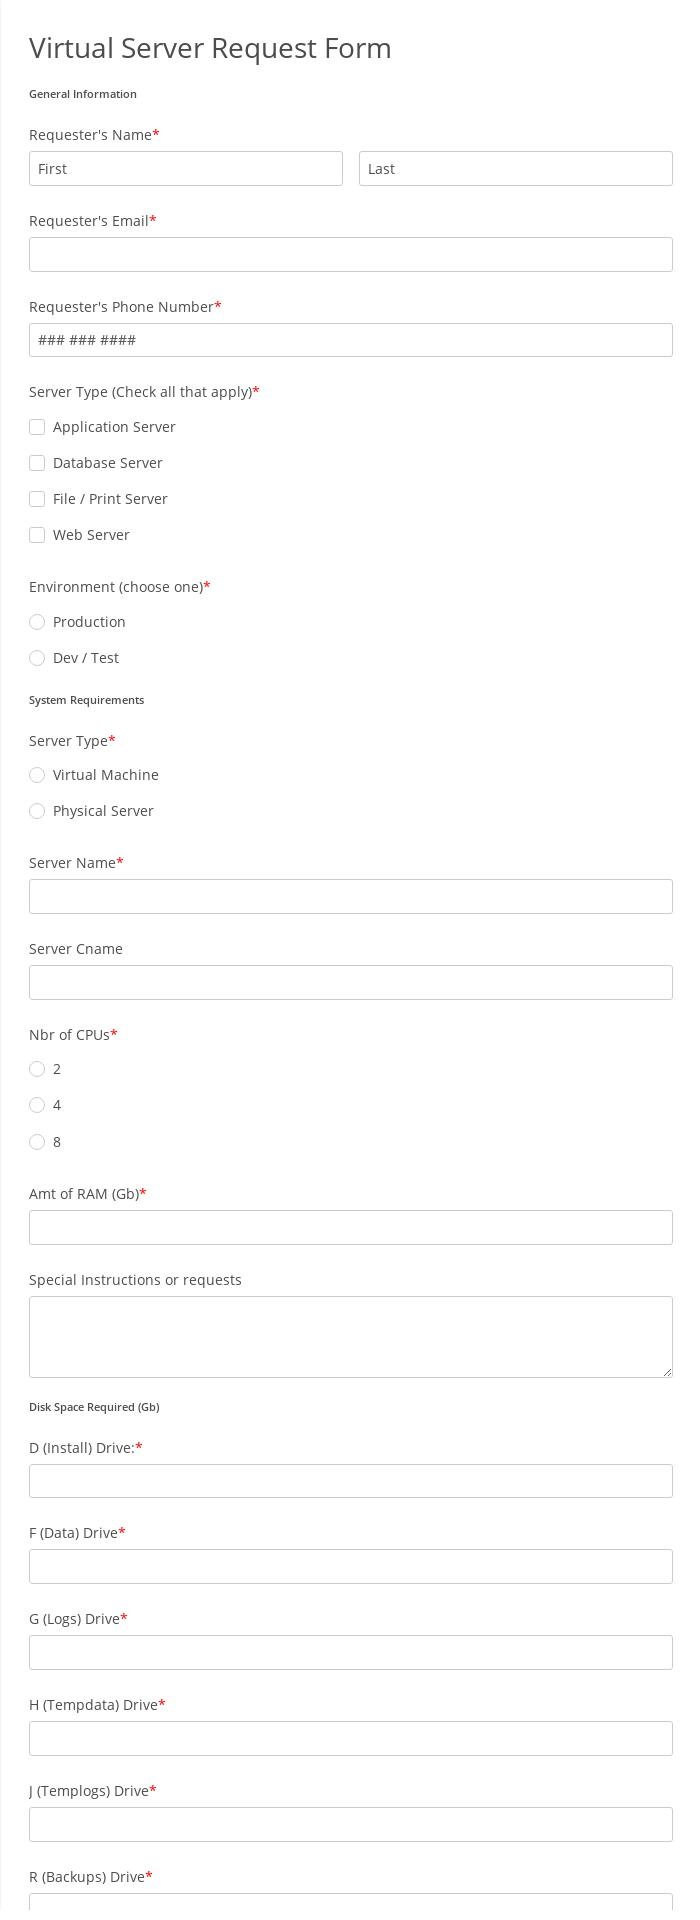 Virtual Server Request Form